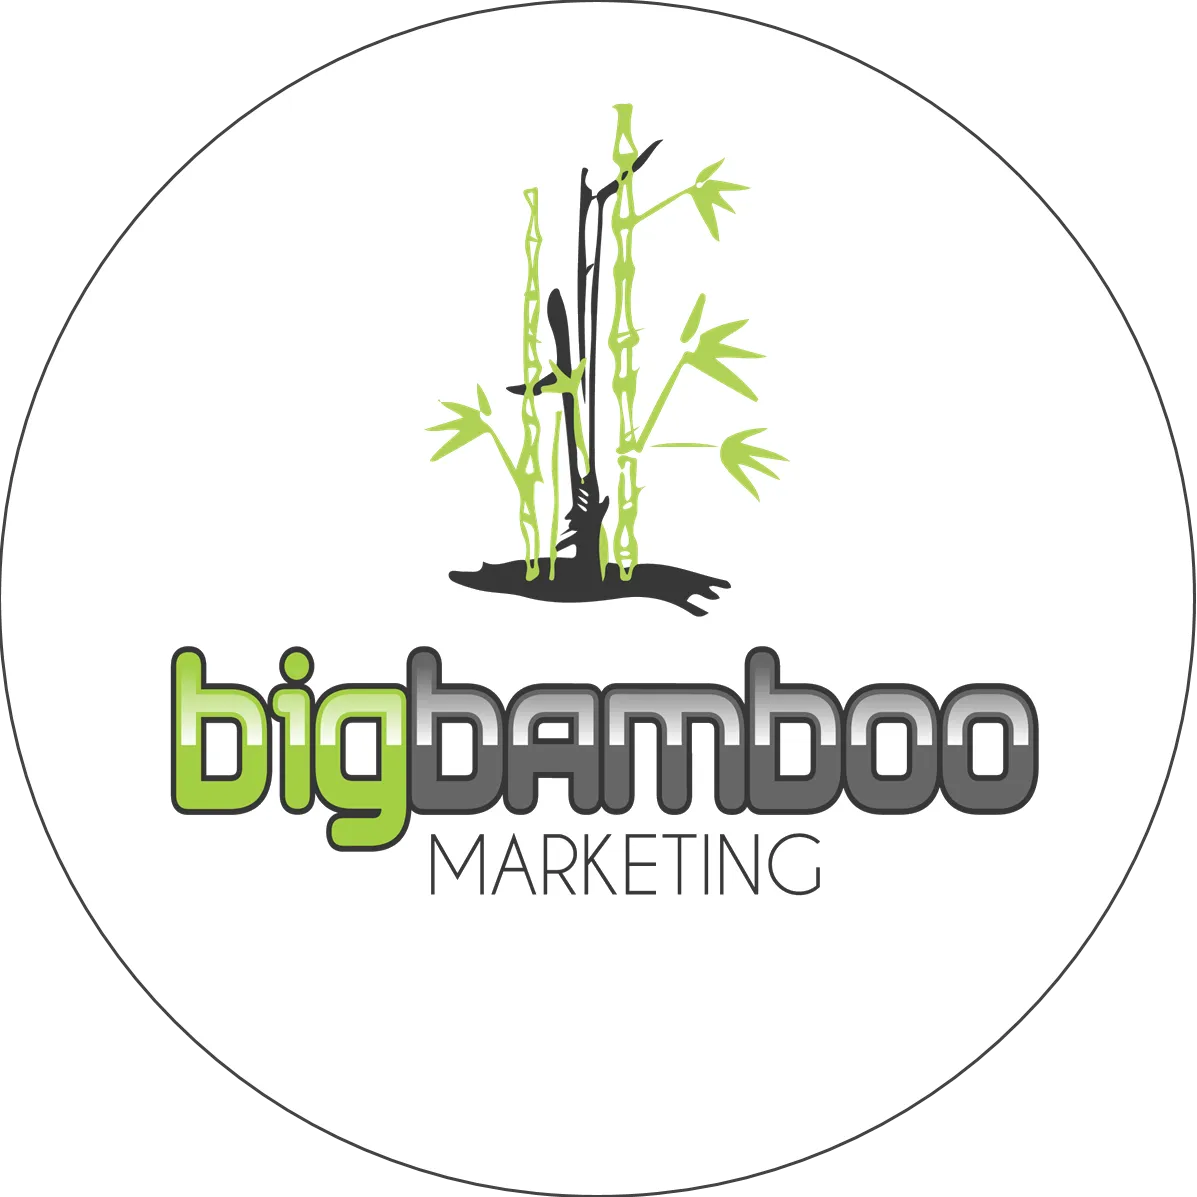 Big Bamboo Marketing - Tree Service Marketing & Lead Generation